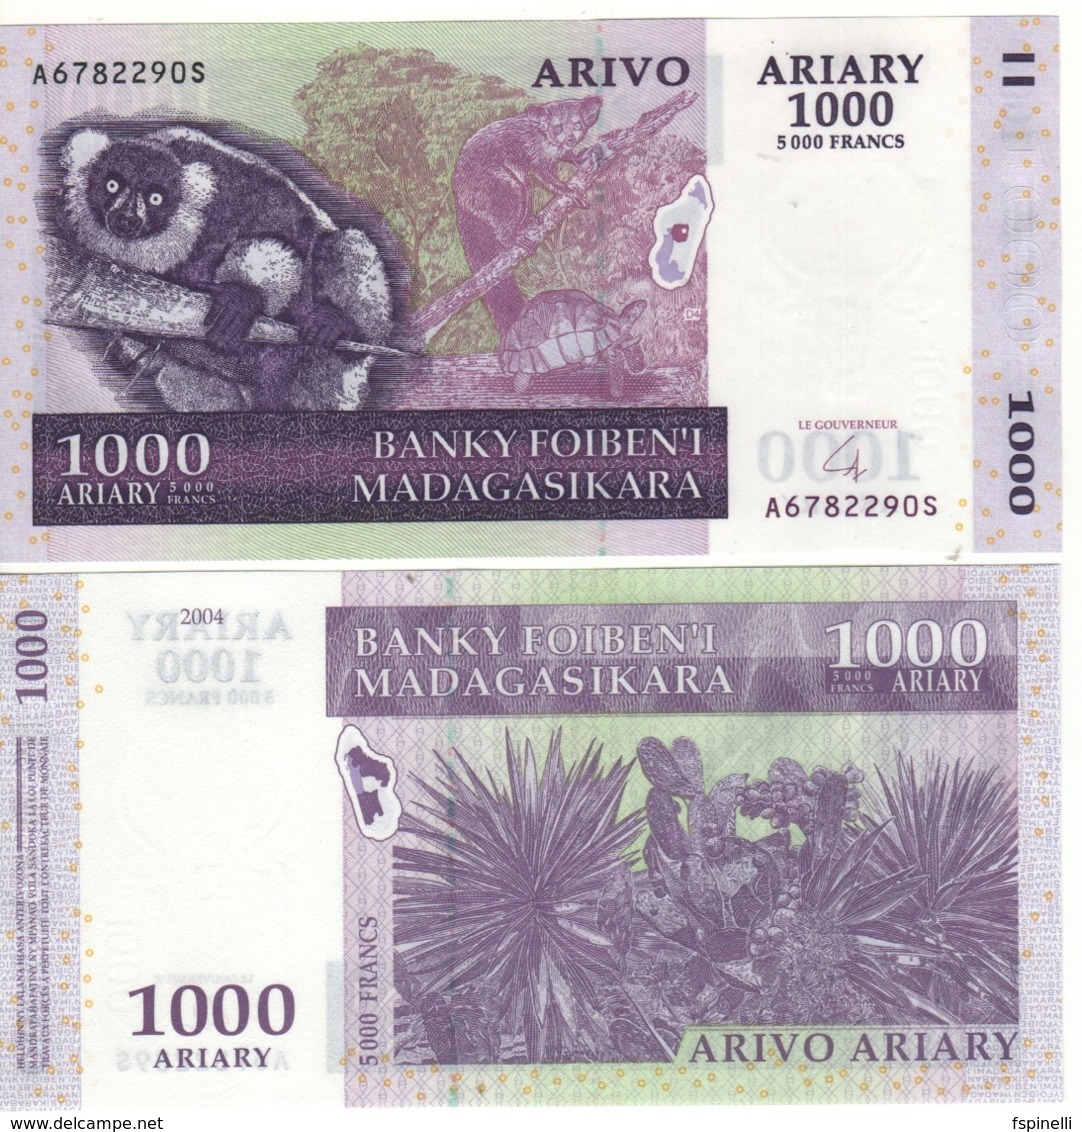 MADAGASCAR  1'000 Ariary  5'000 Francs      P89b  (ND  2004) - Madagascar